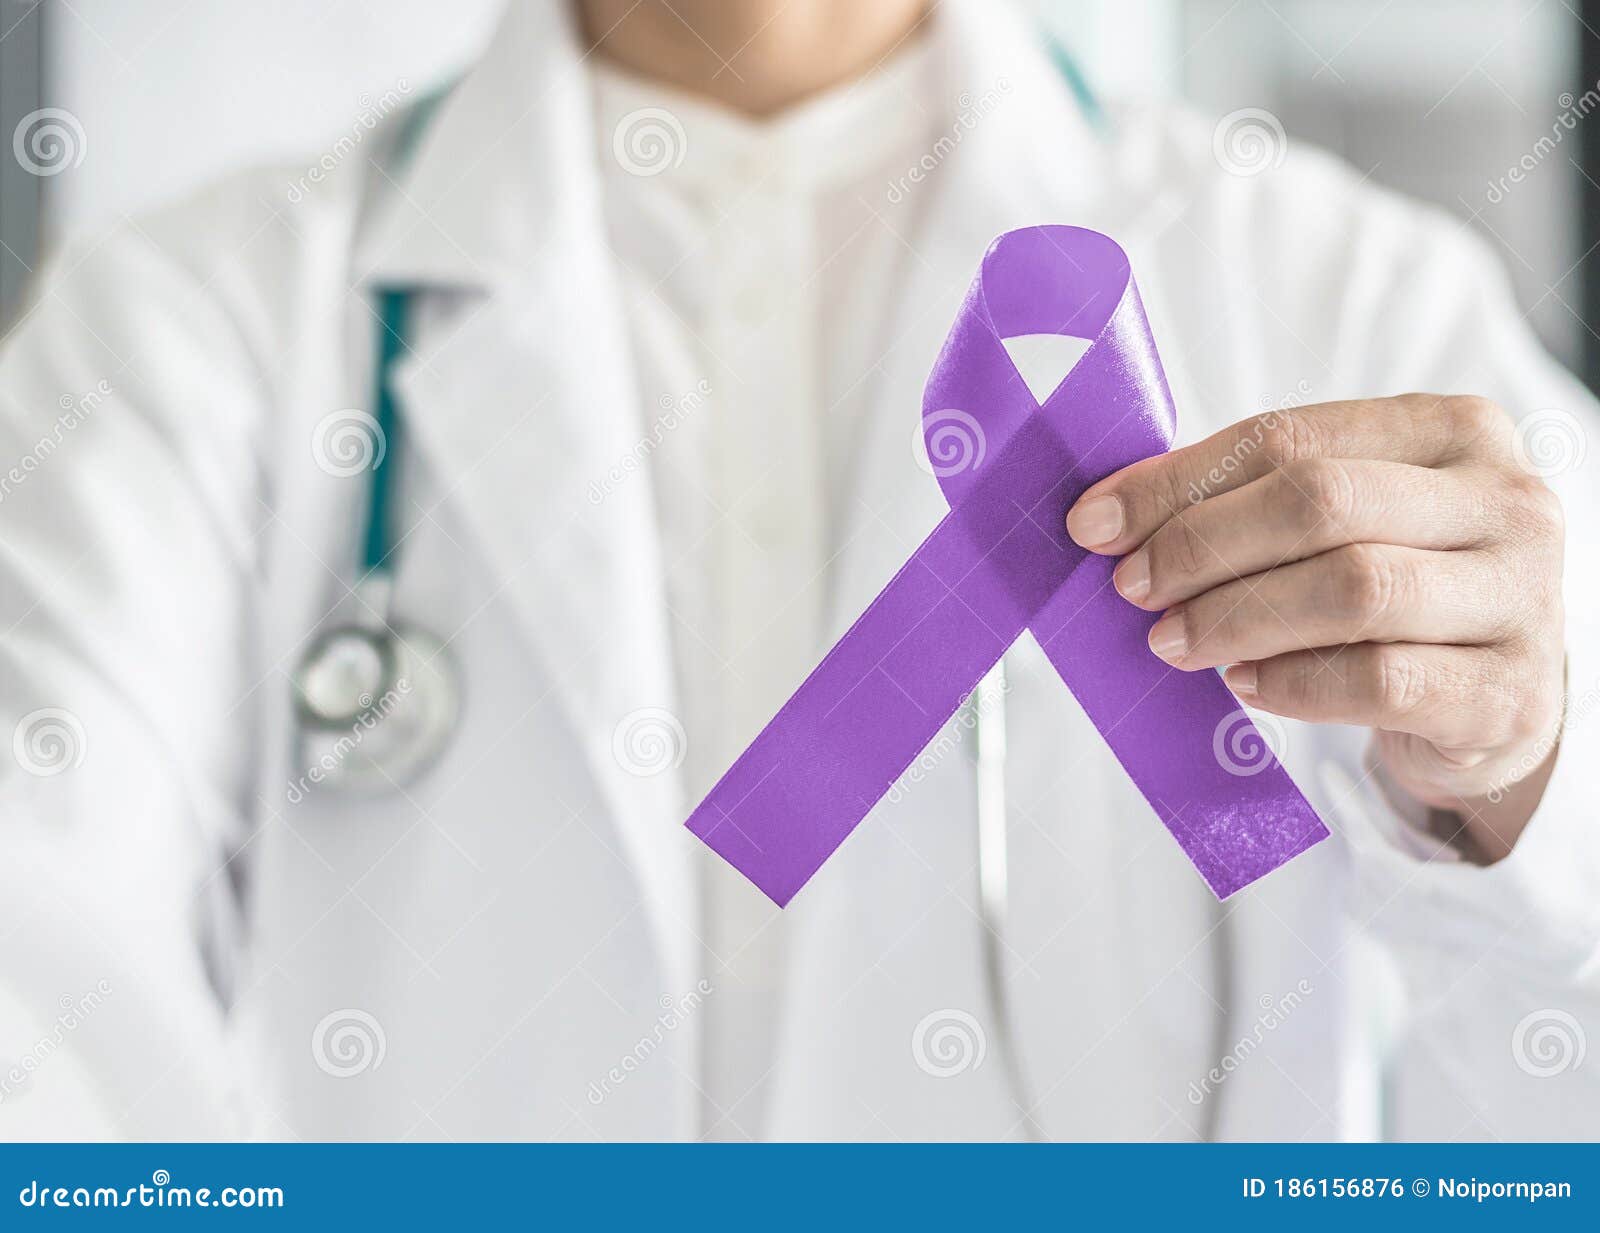 orchid purple lavender ribbon awareness in doctorÃ¢â¬â¢s hand for (all kinds cancers), testicular cancer awareness